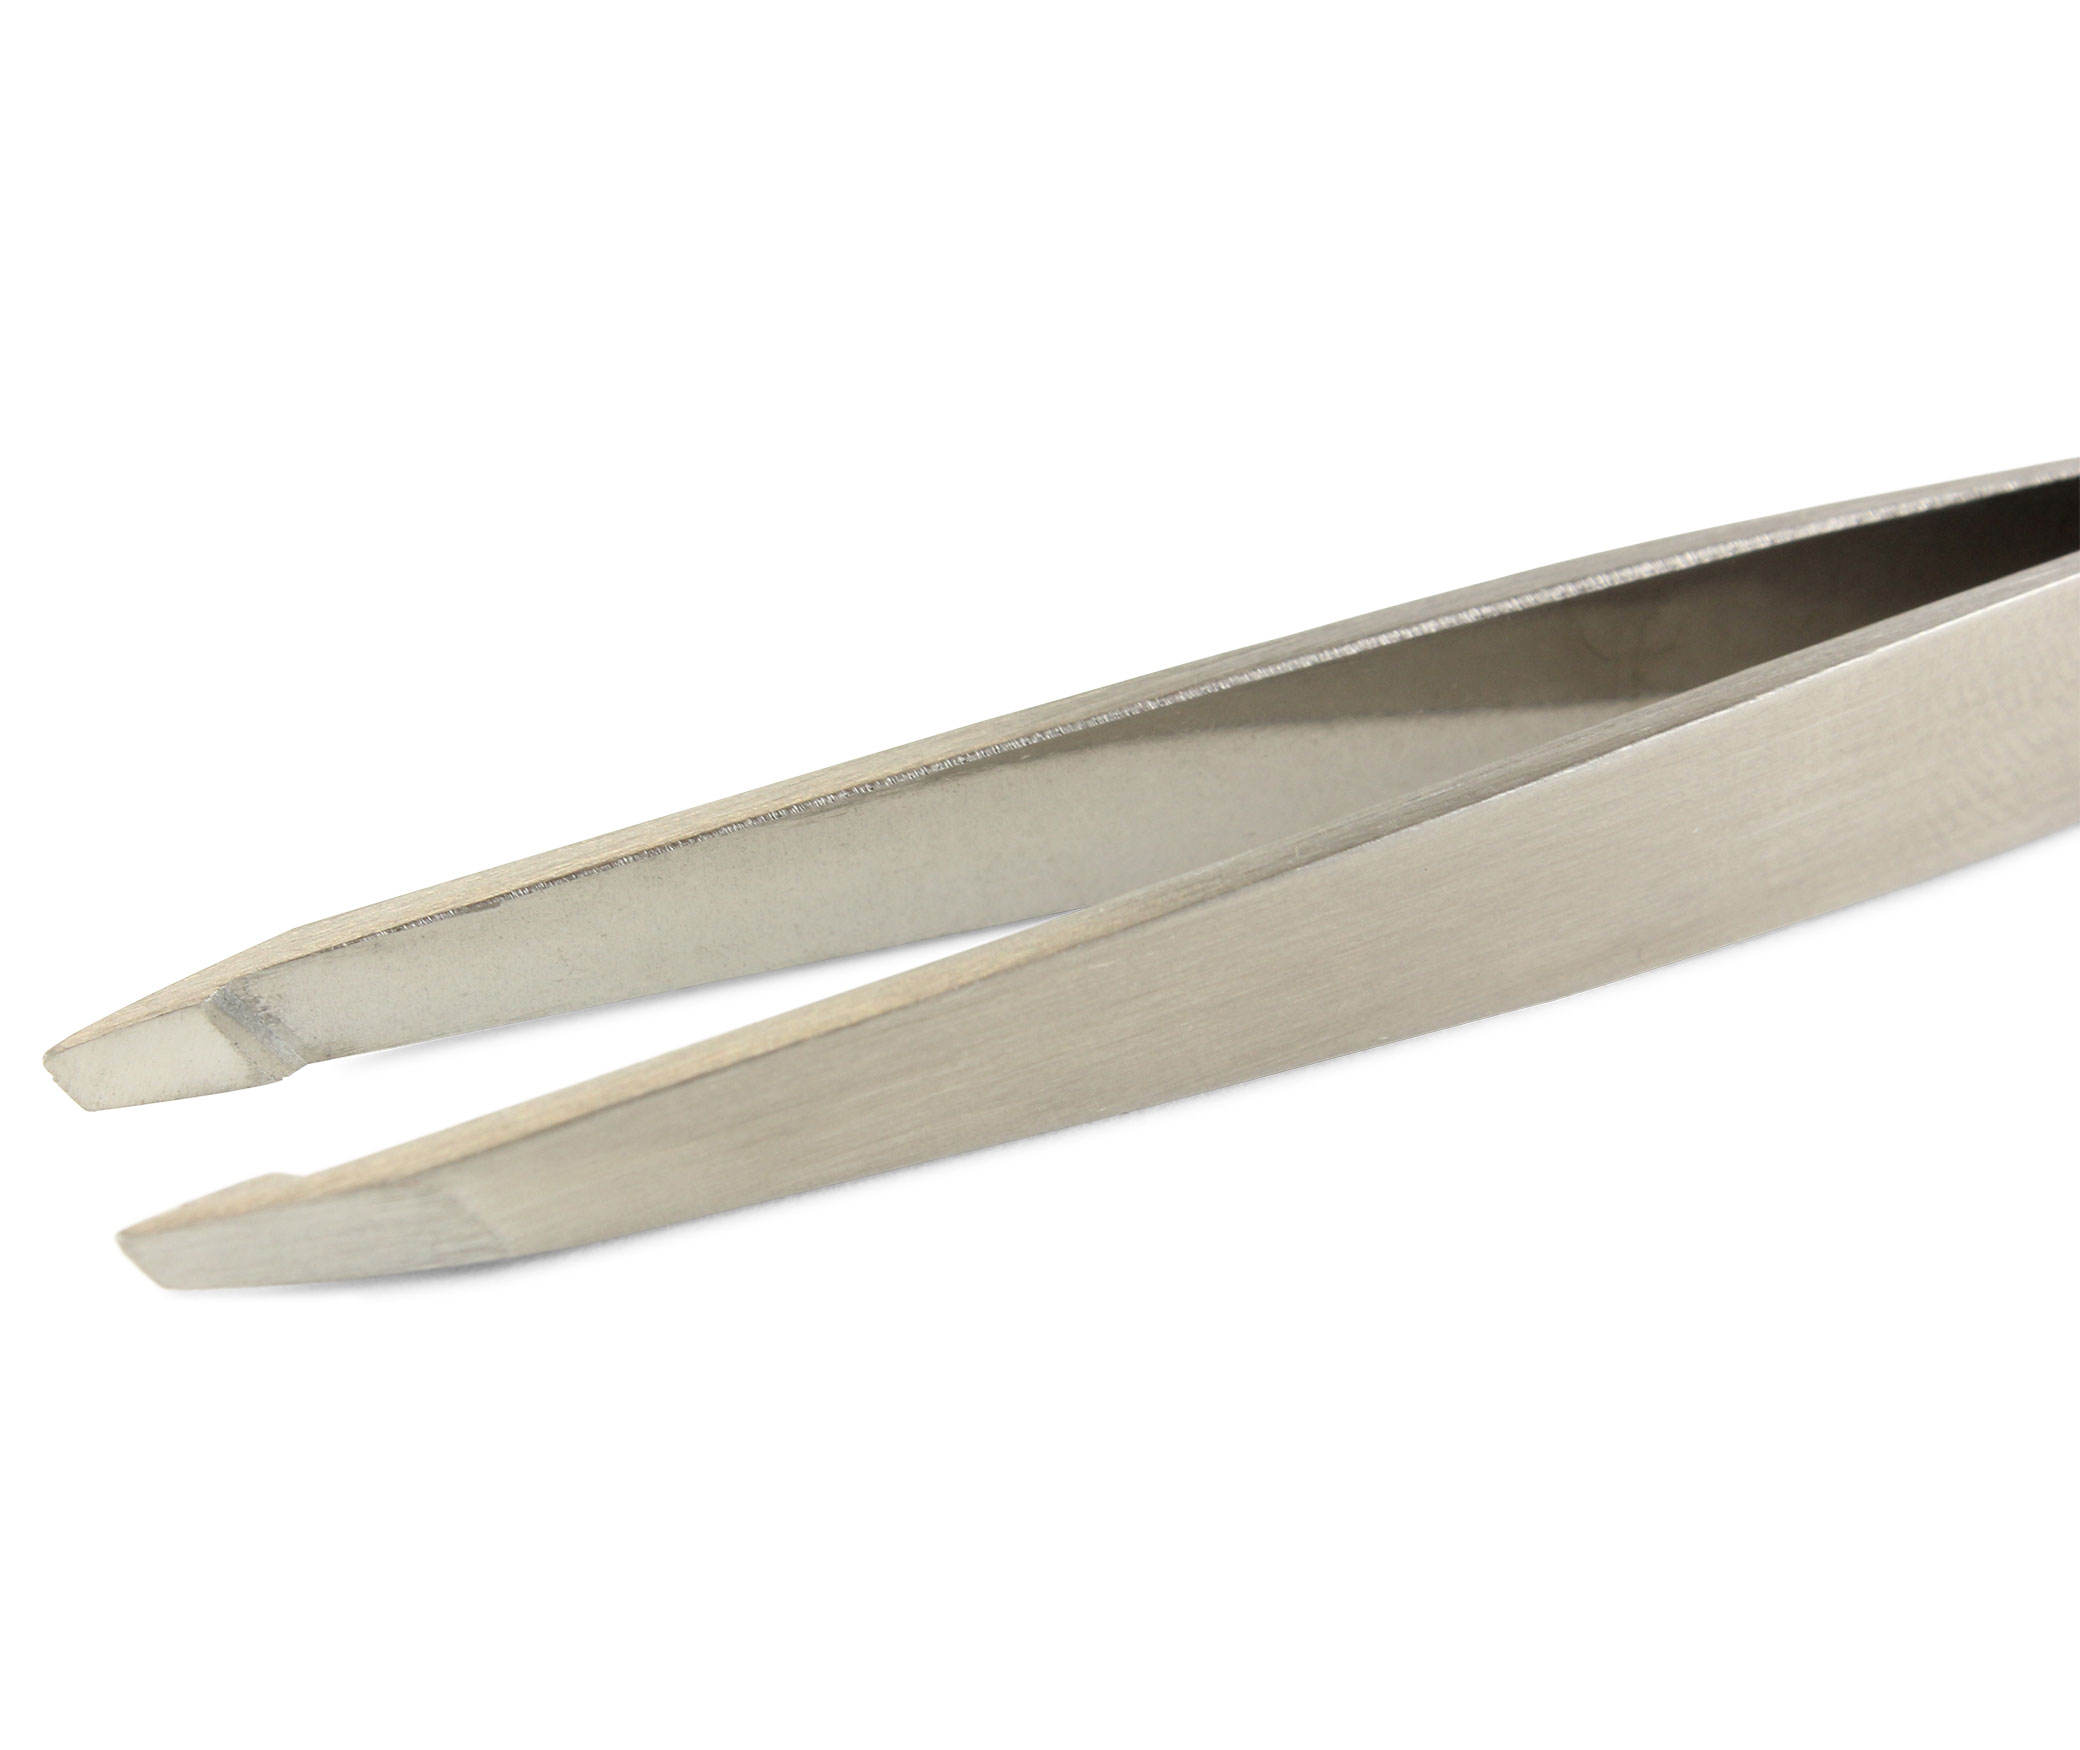 Seki Edge Stainless Steel Slant Tweezers (SS-513) slanted tips